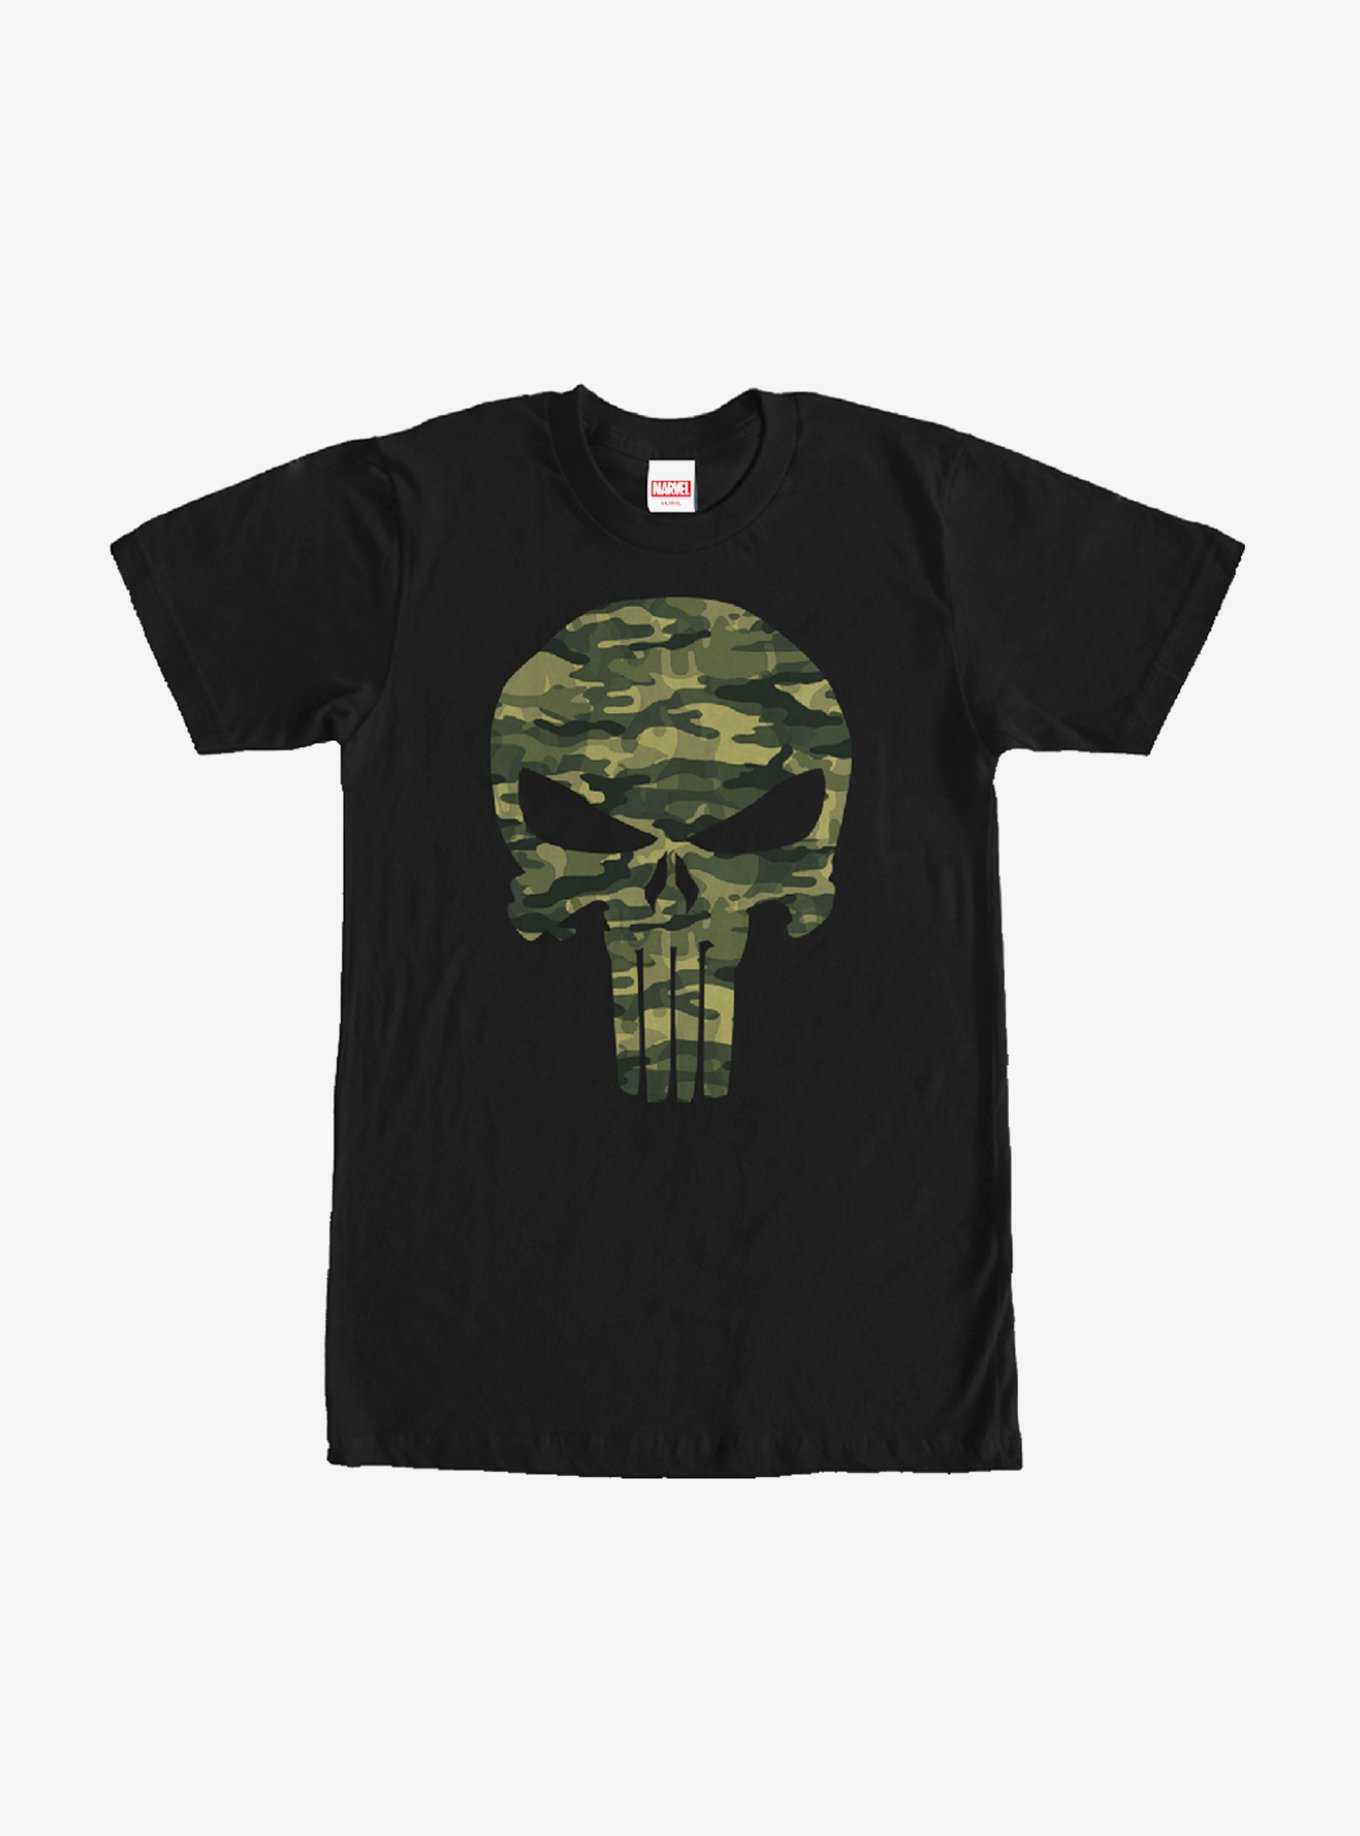 Marvel Punisher Camo Skull Symbol T-Shirt, , hi-res